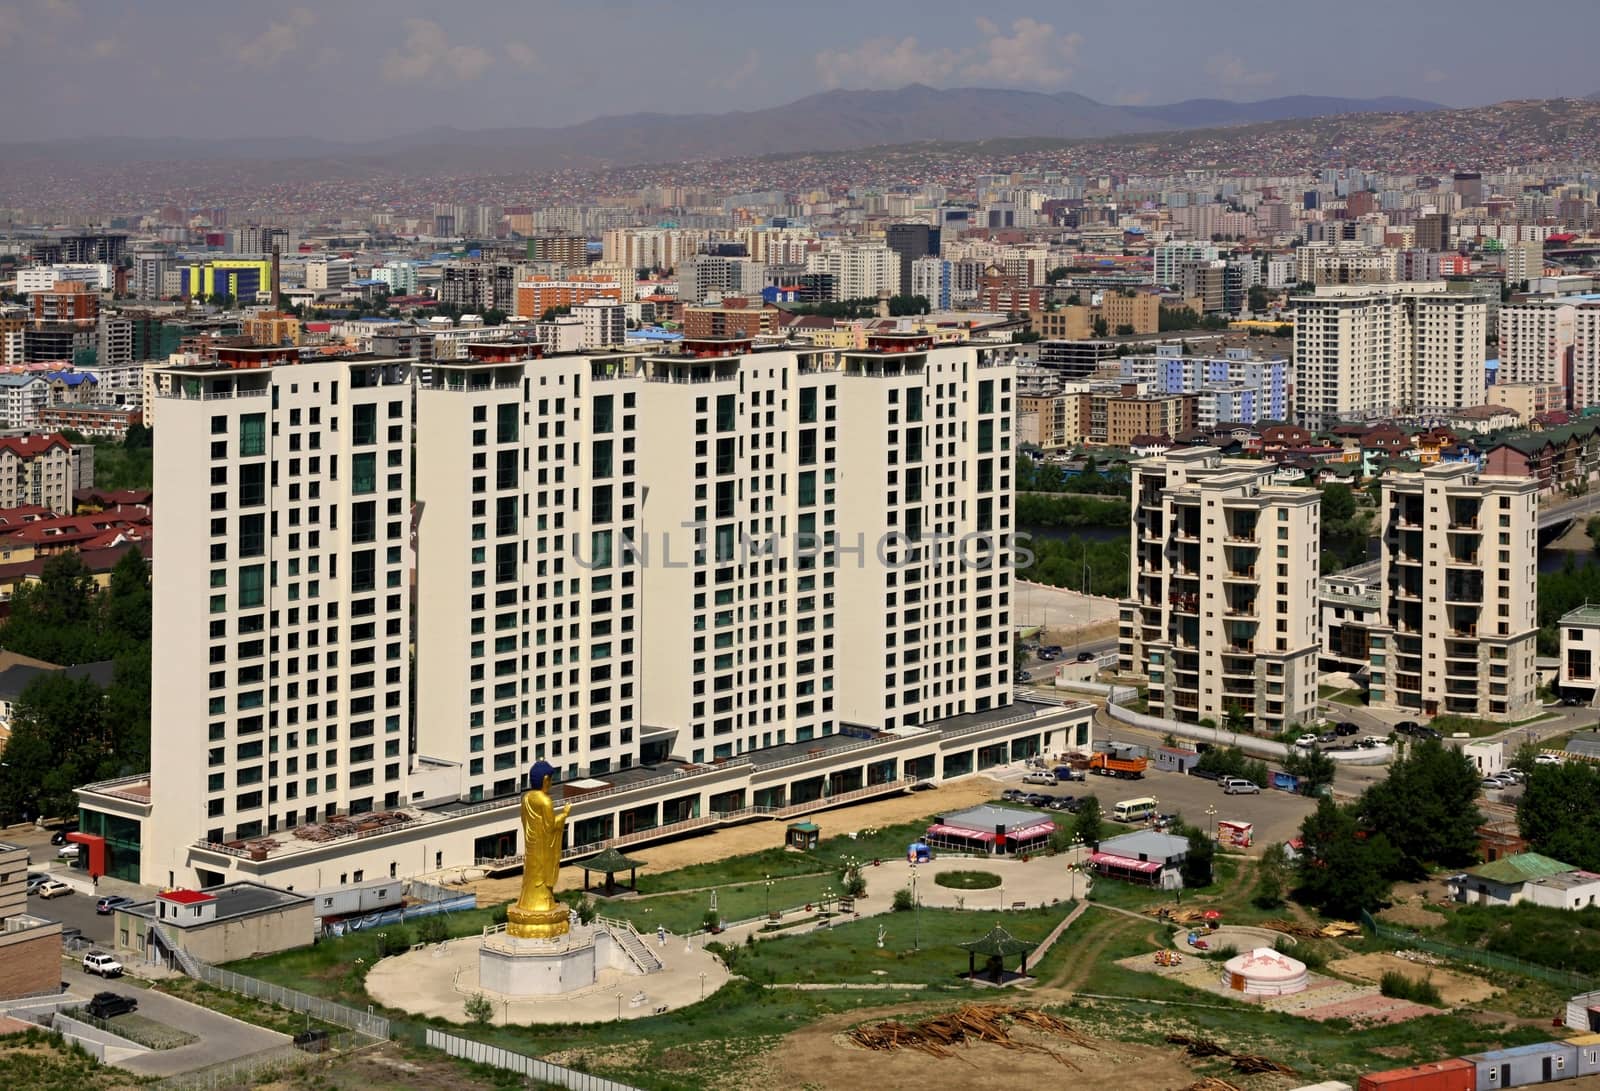 New buildings in the capital city Ulaanbaatar,Mongolia by jnerad